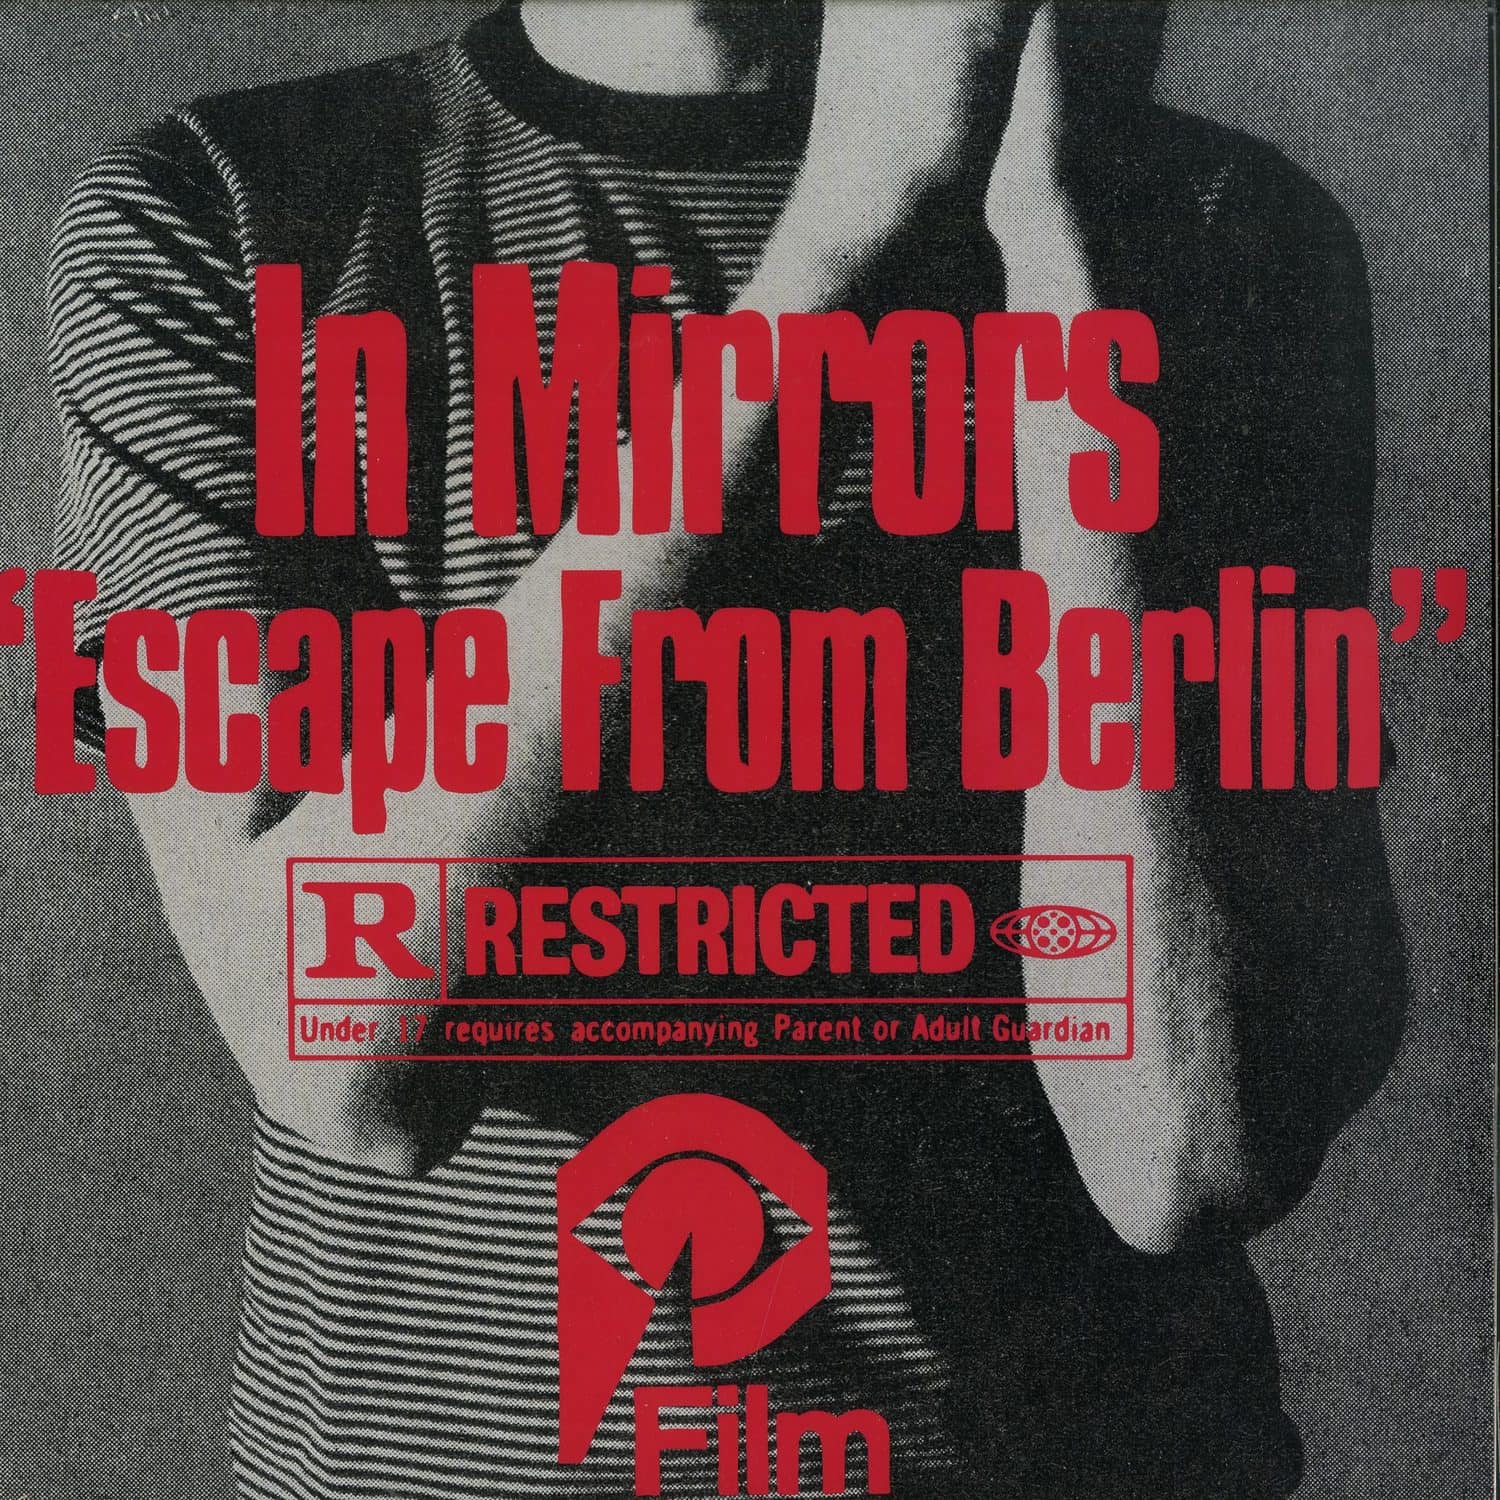 In Mirror - ESCAPE FROM BERLIN 